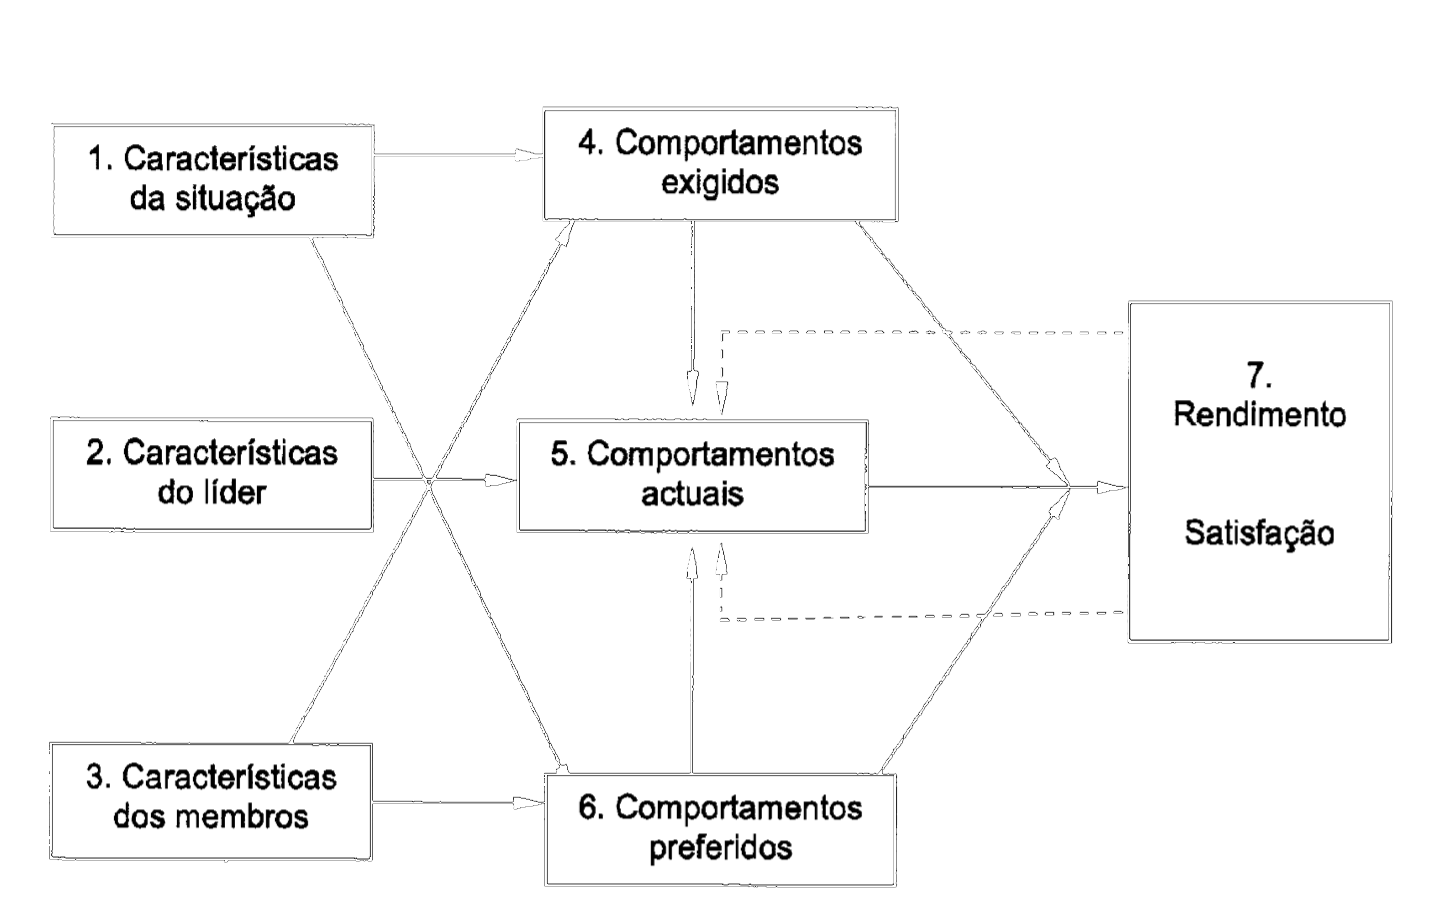 Modelo Multidimensional de Liderança no Desporto proposto por Chelladurai, adaptado por (Ferreira, 2008).